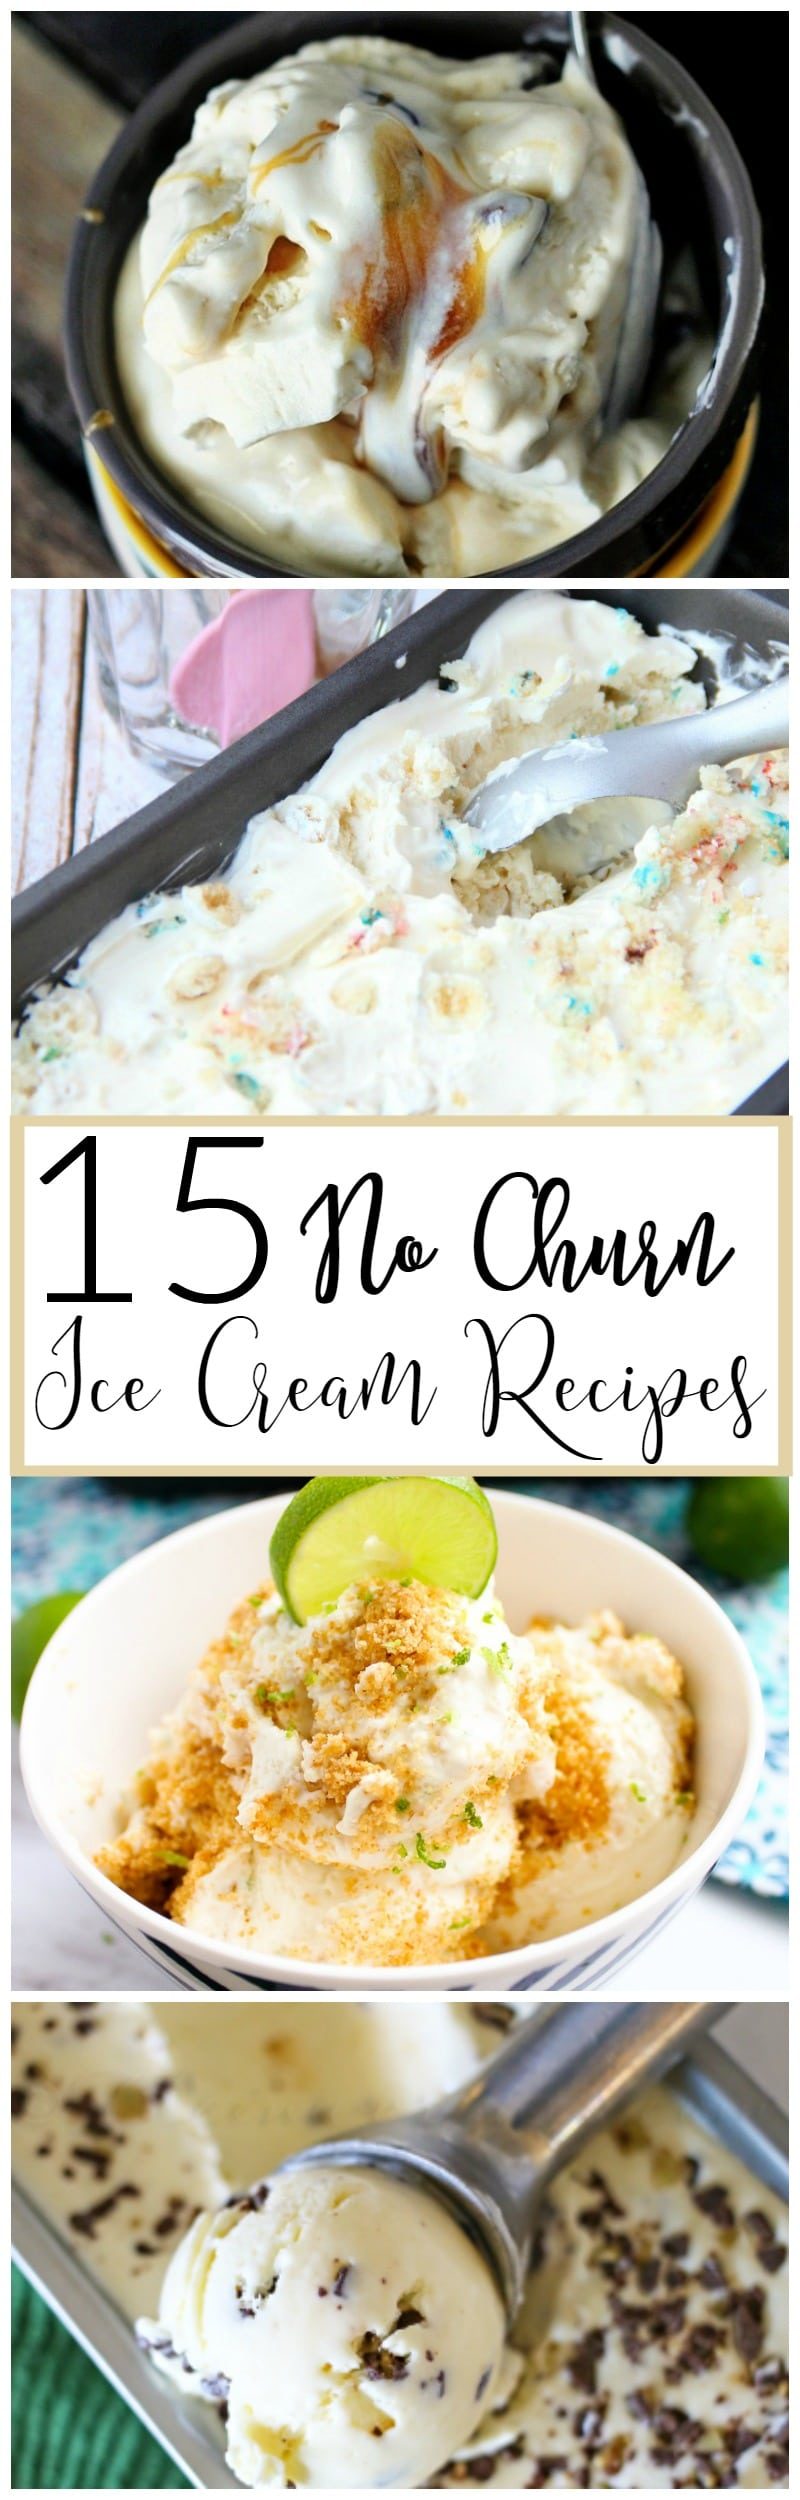 15 EASY no churn ice cream recipes you need to try!